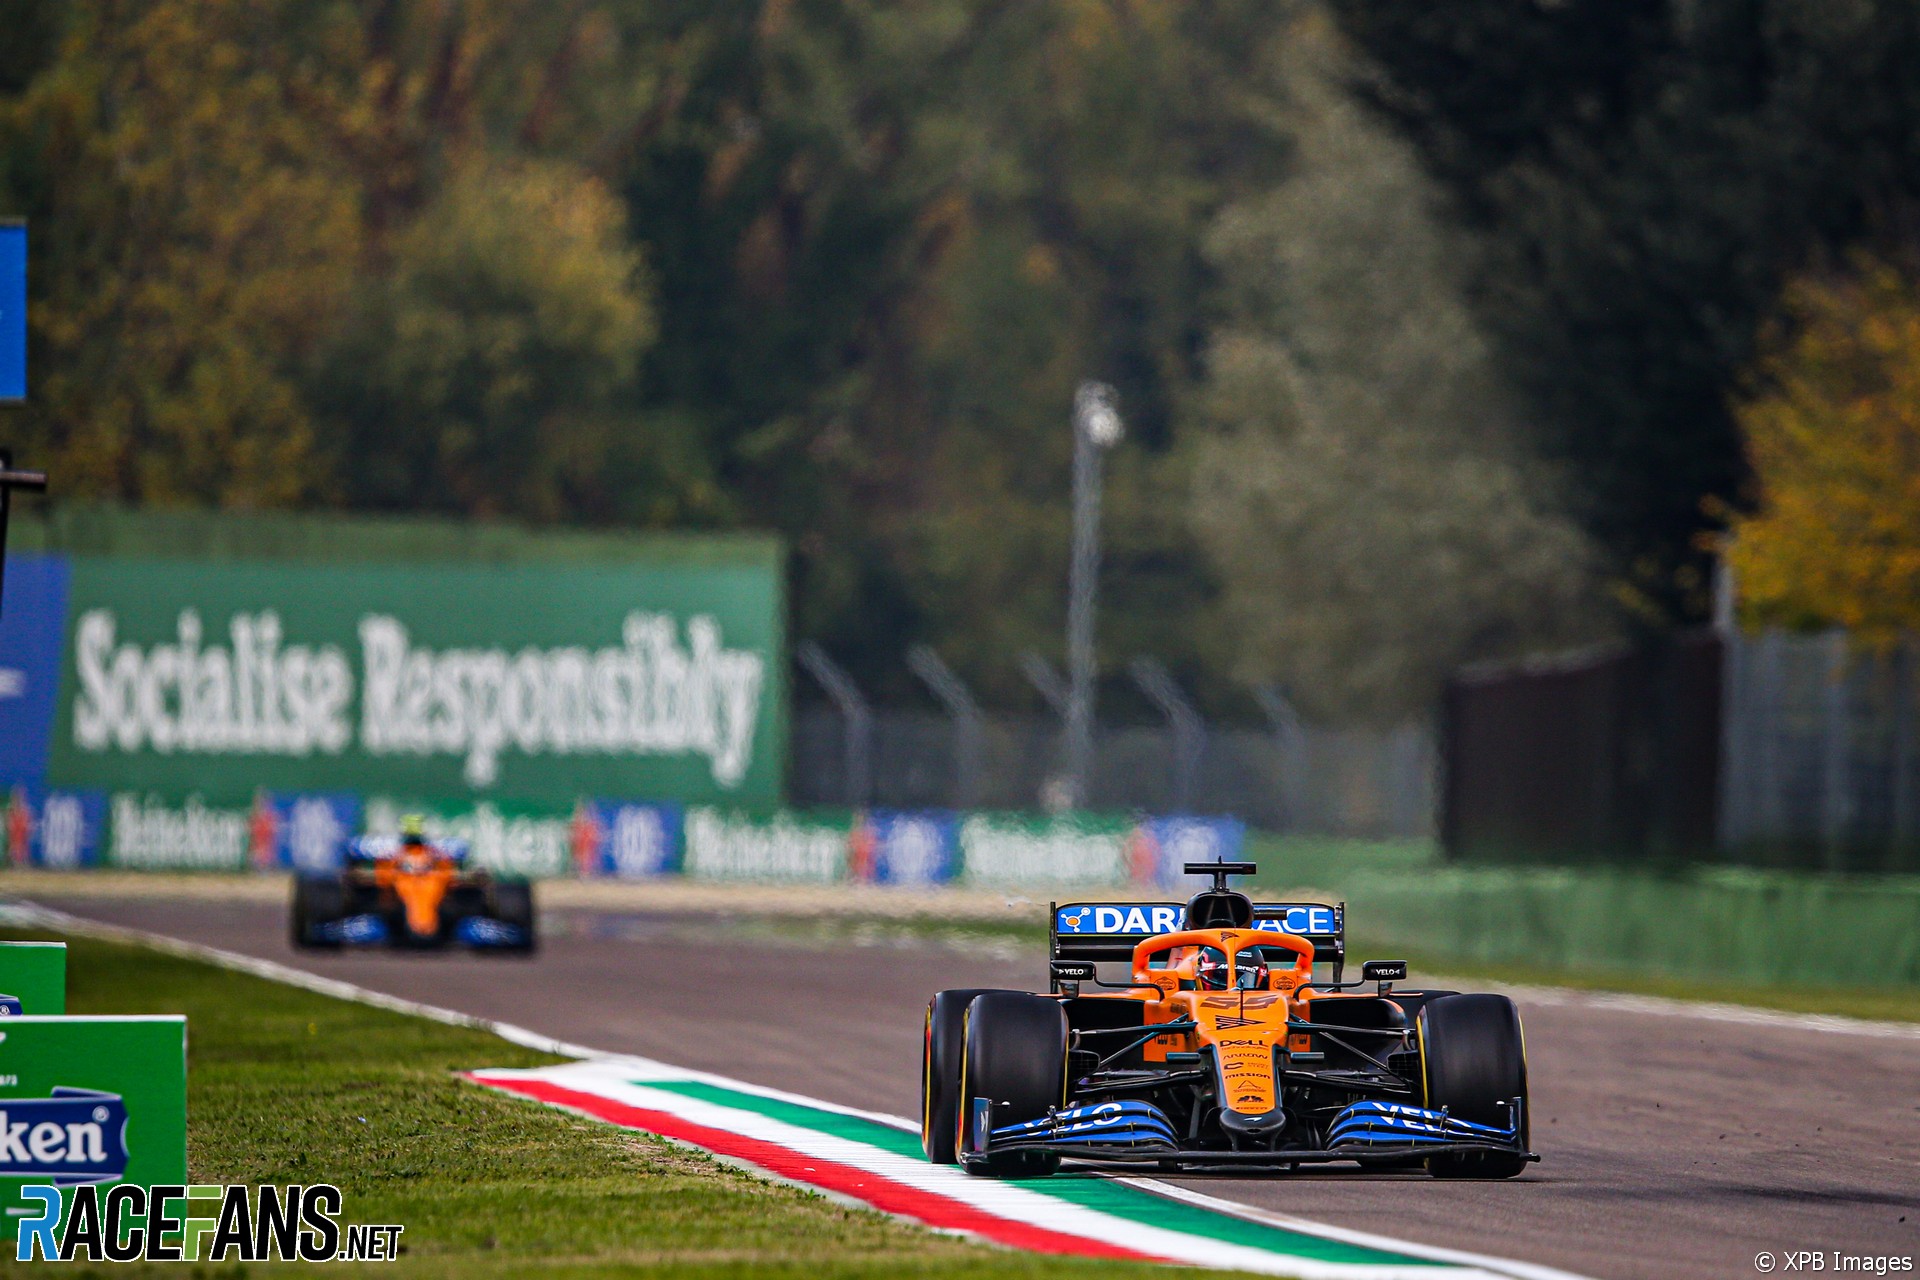 Carlos Sainz Jnr, McLaren, Imola, 2020